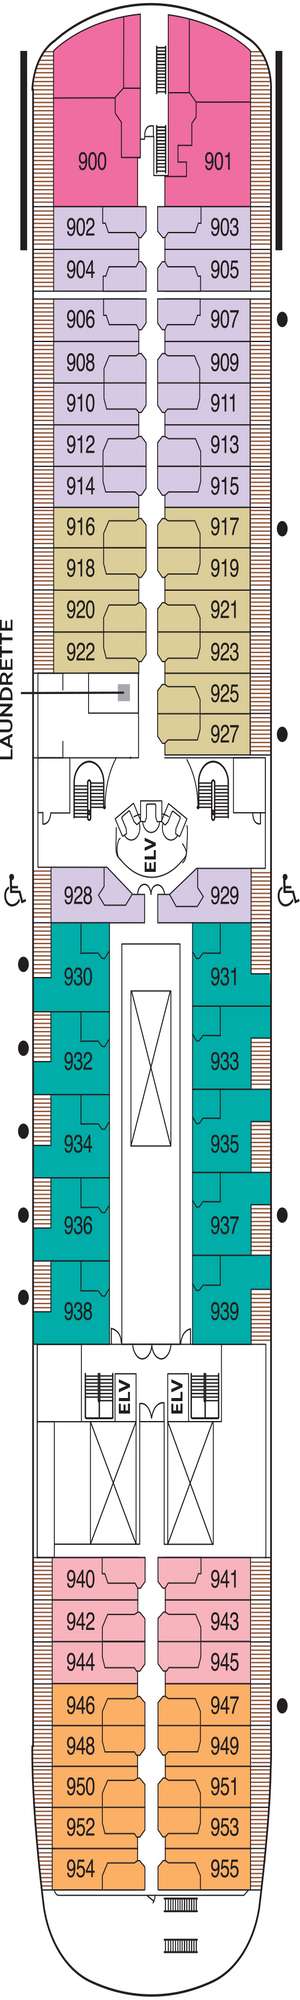 Deck plan for Regent Seven Seas Navigator